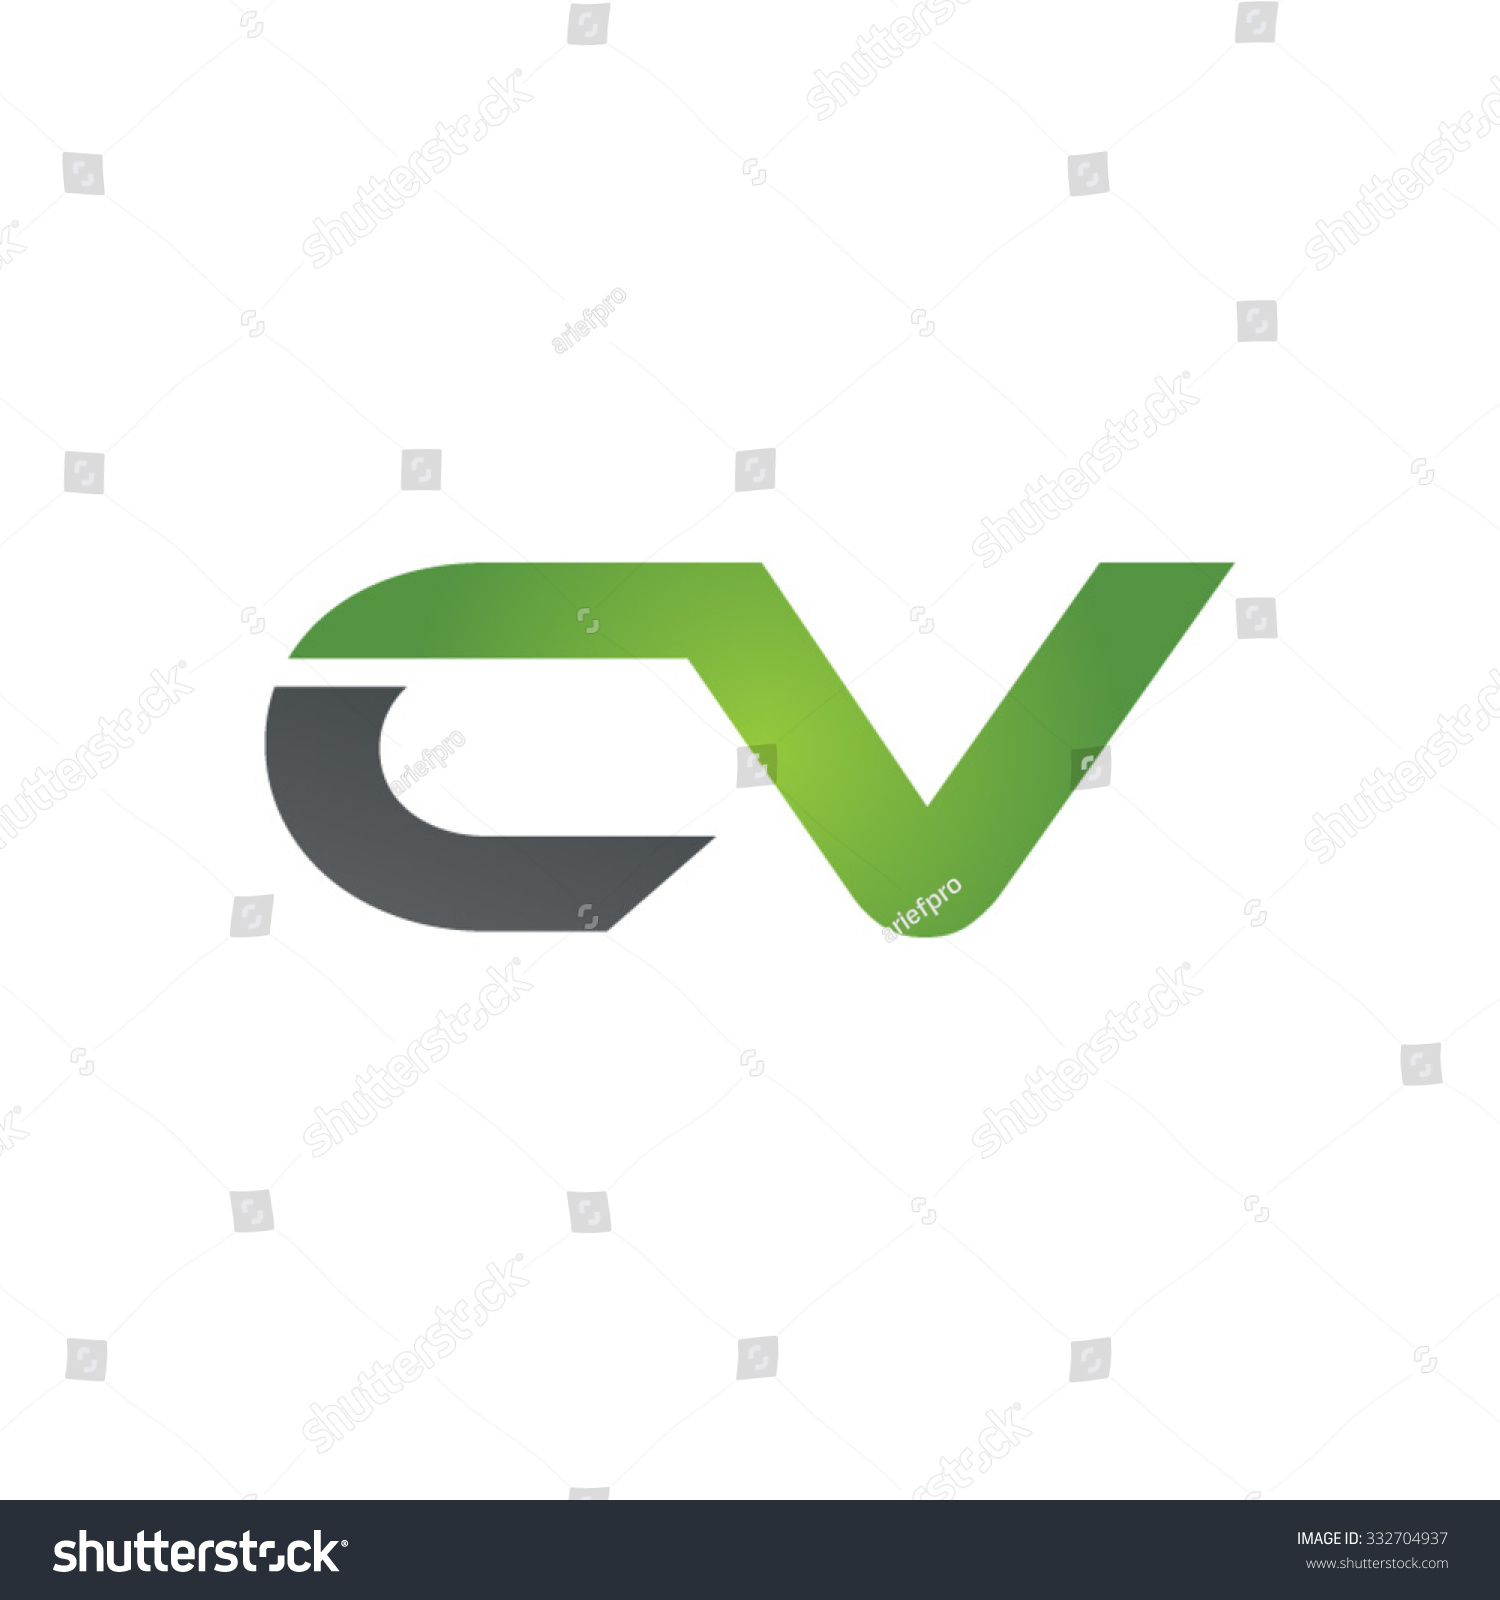 cv company linked letter logo green stock vector illustration 332704937   shutterstock